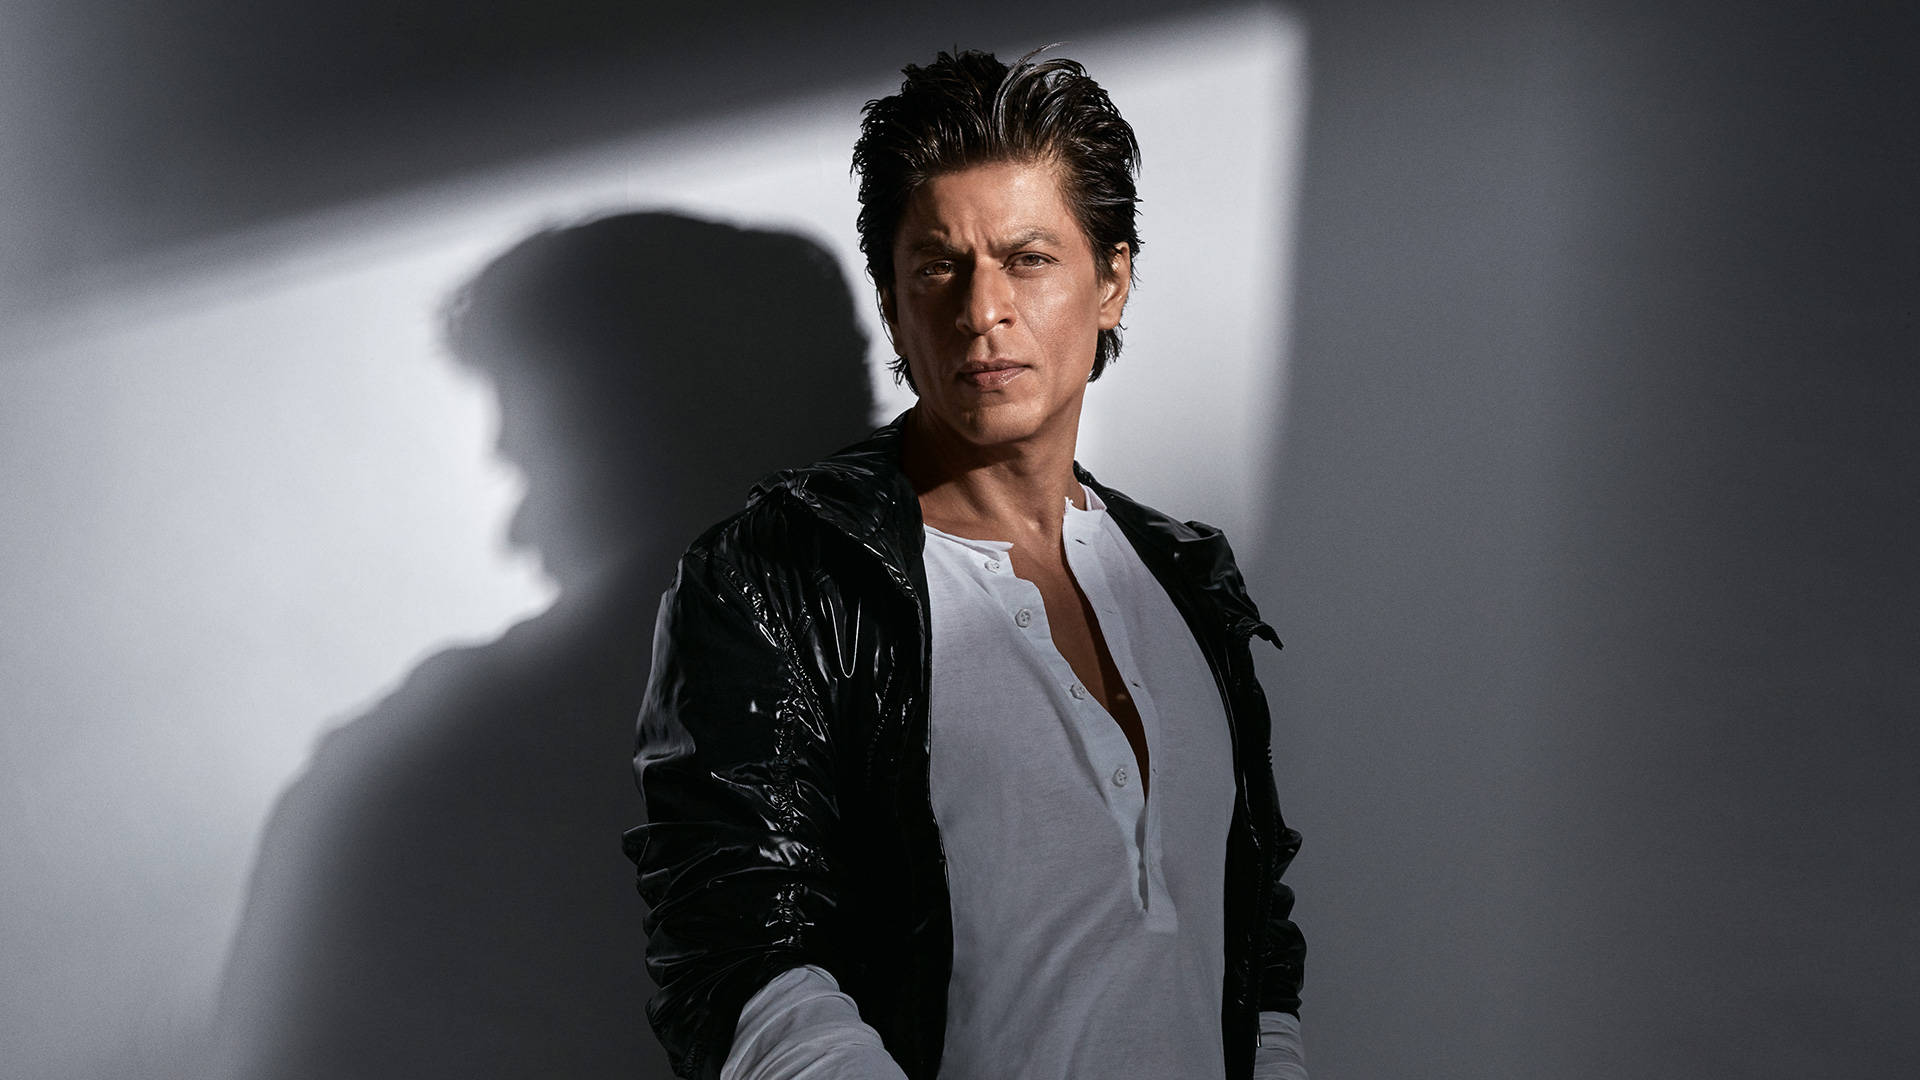 Shah Rukh Khan Vogue Photoshoot Background